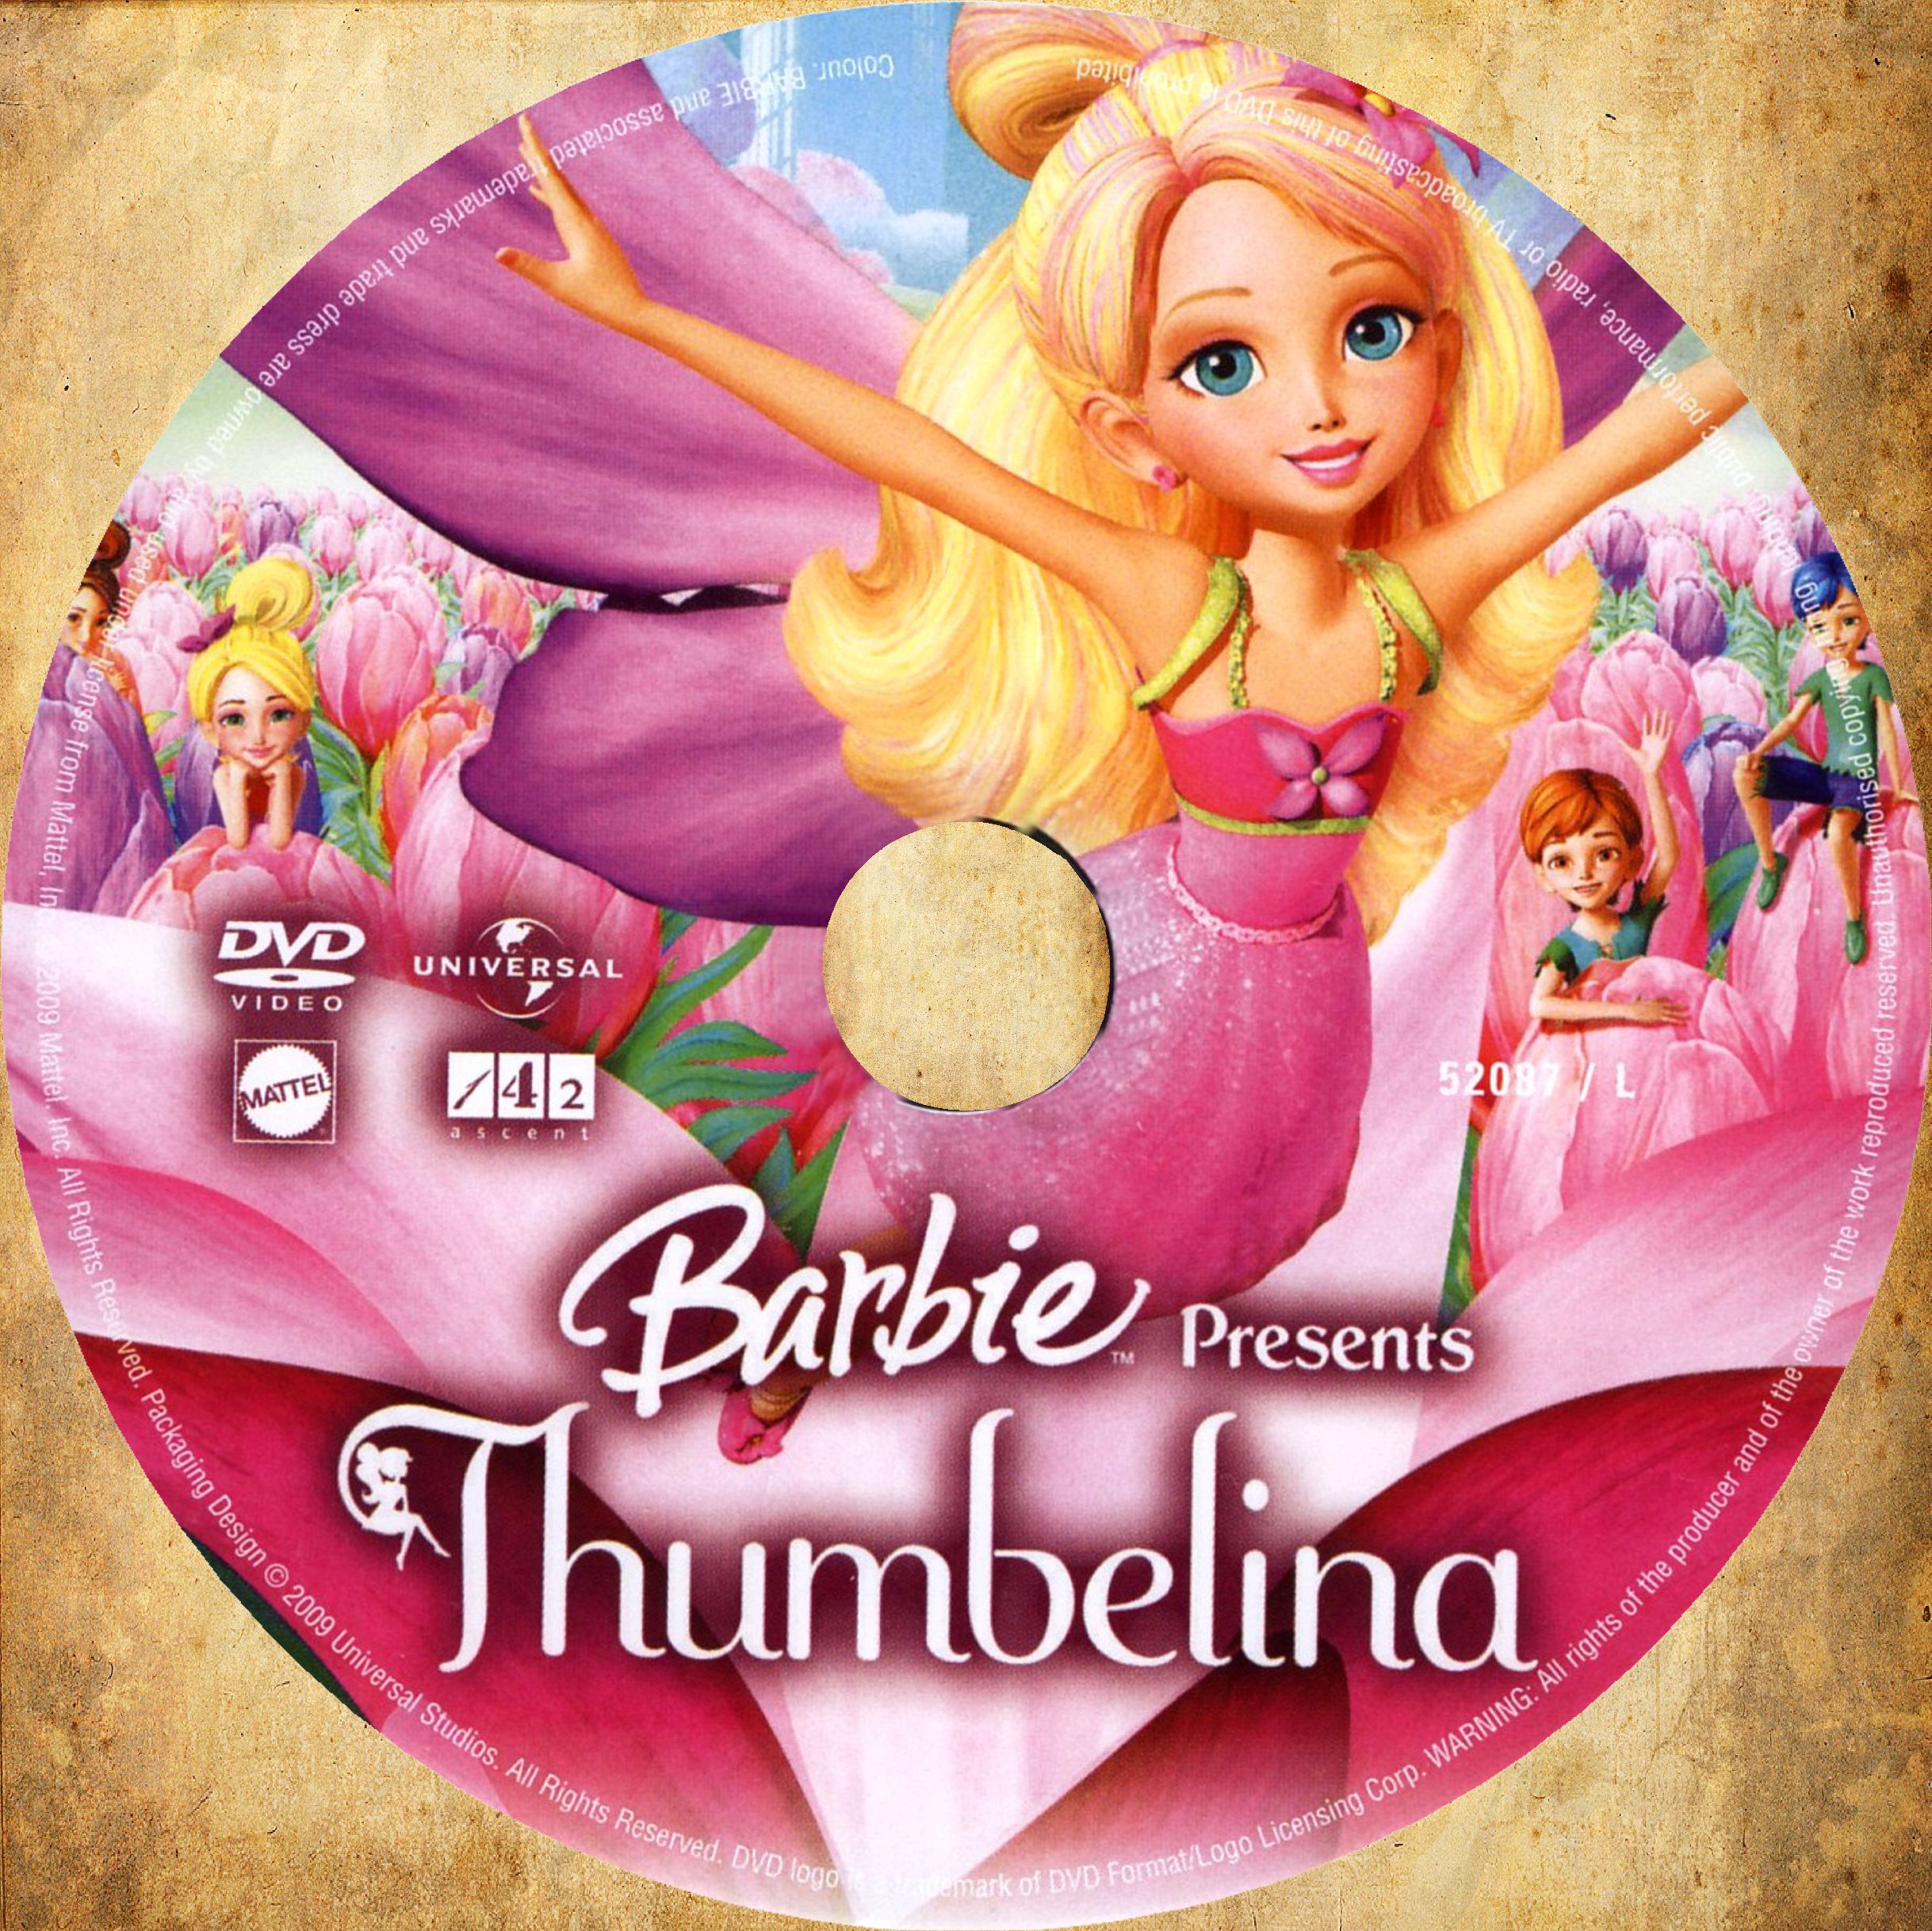 Download Barbie Presents Thumbelina 2009 Full Hd Quality